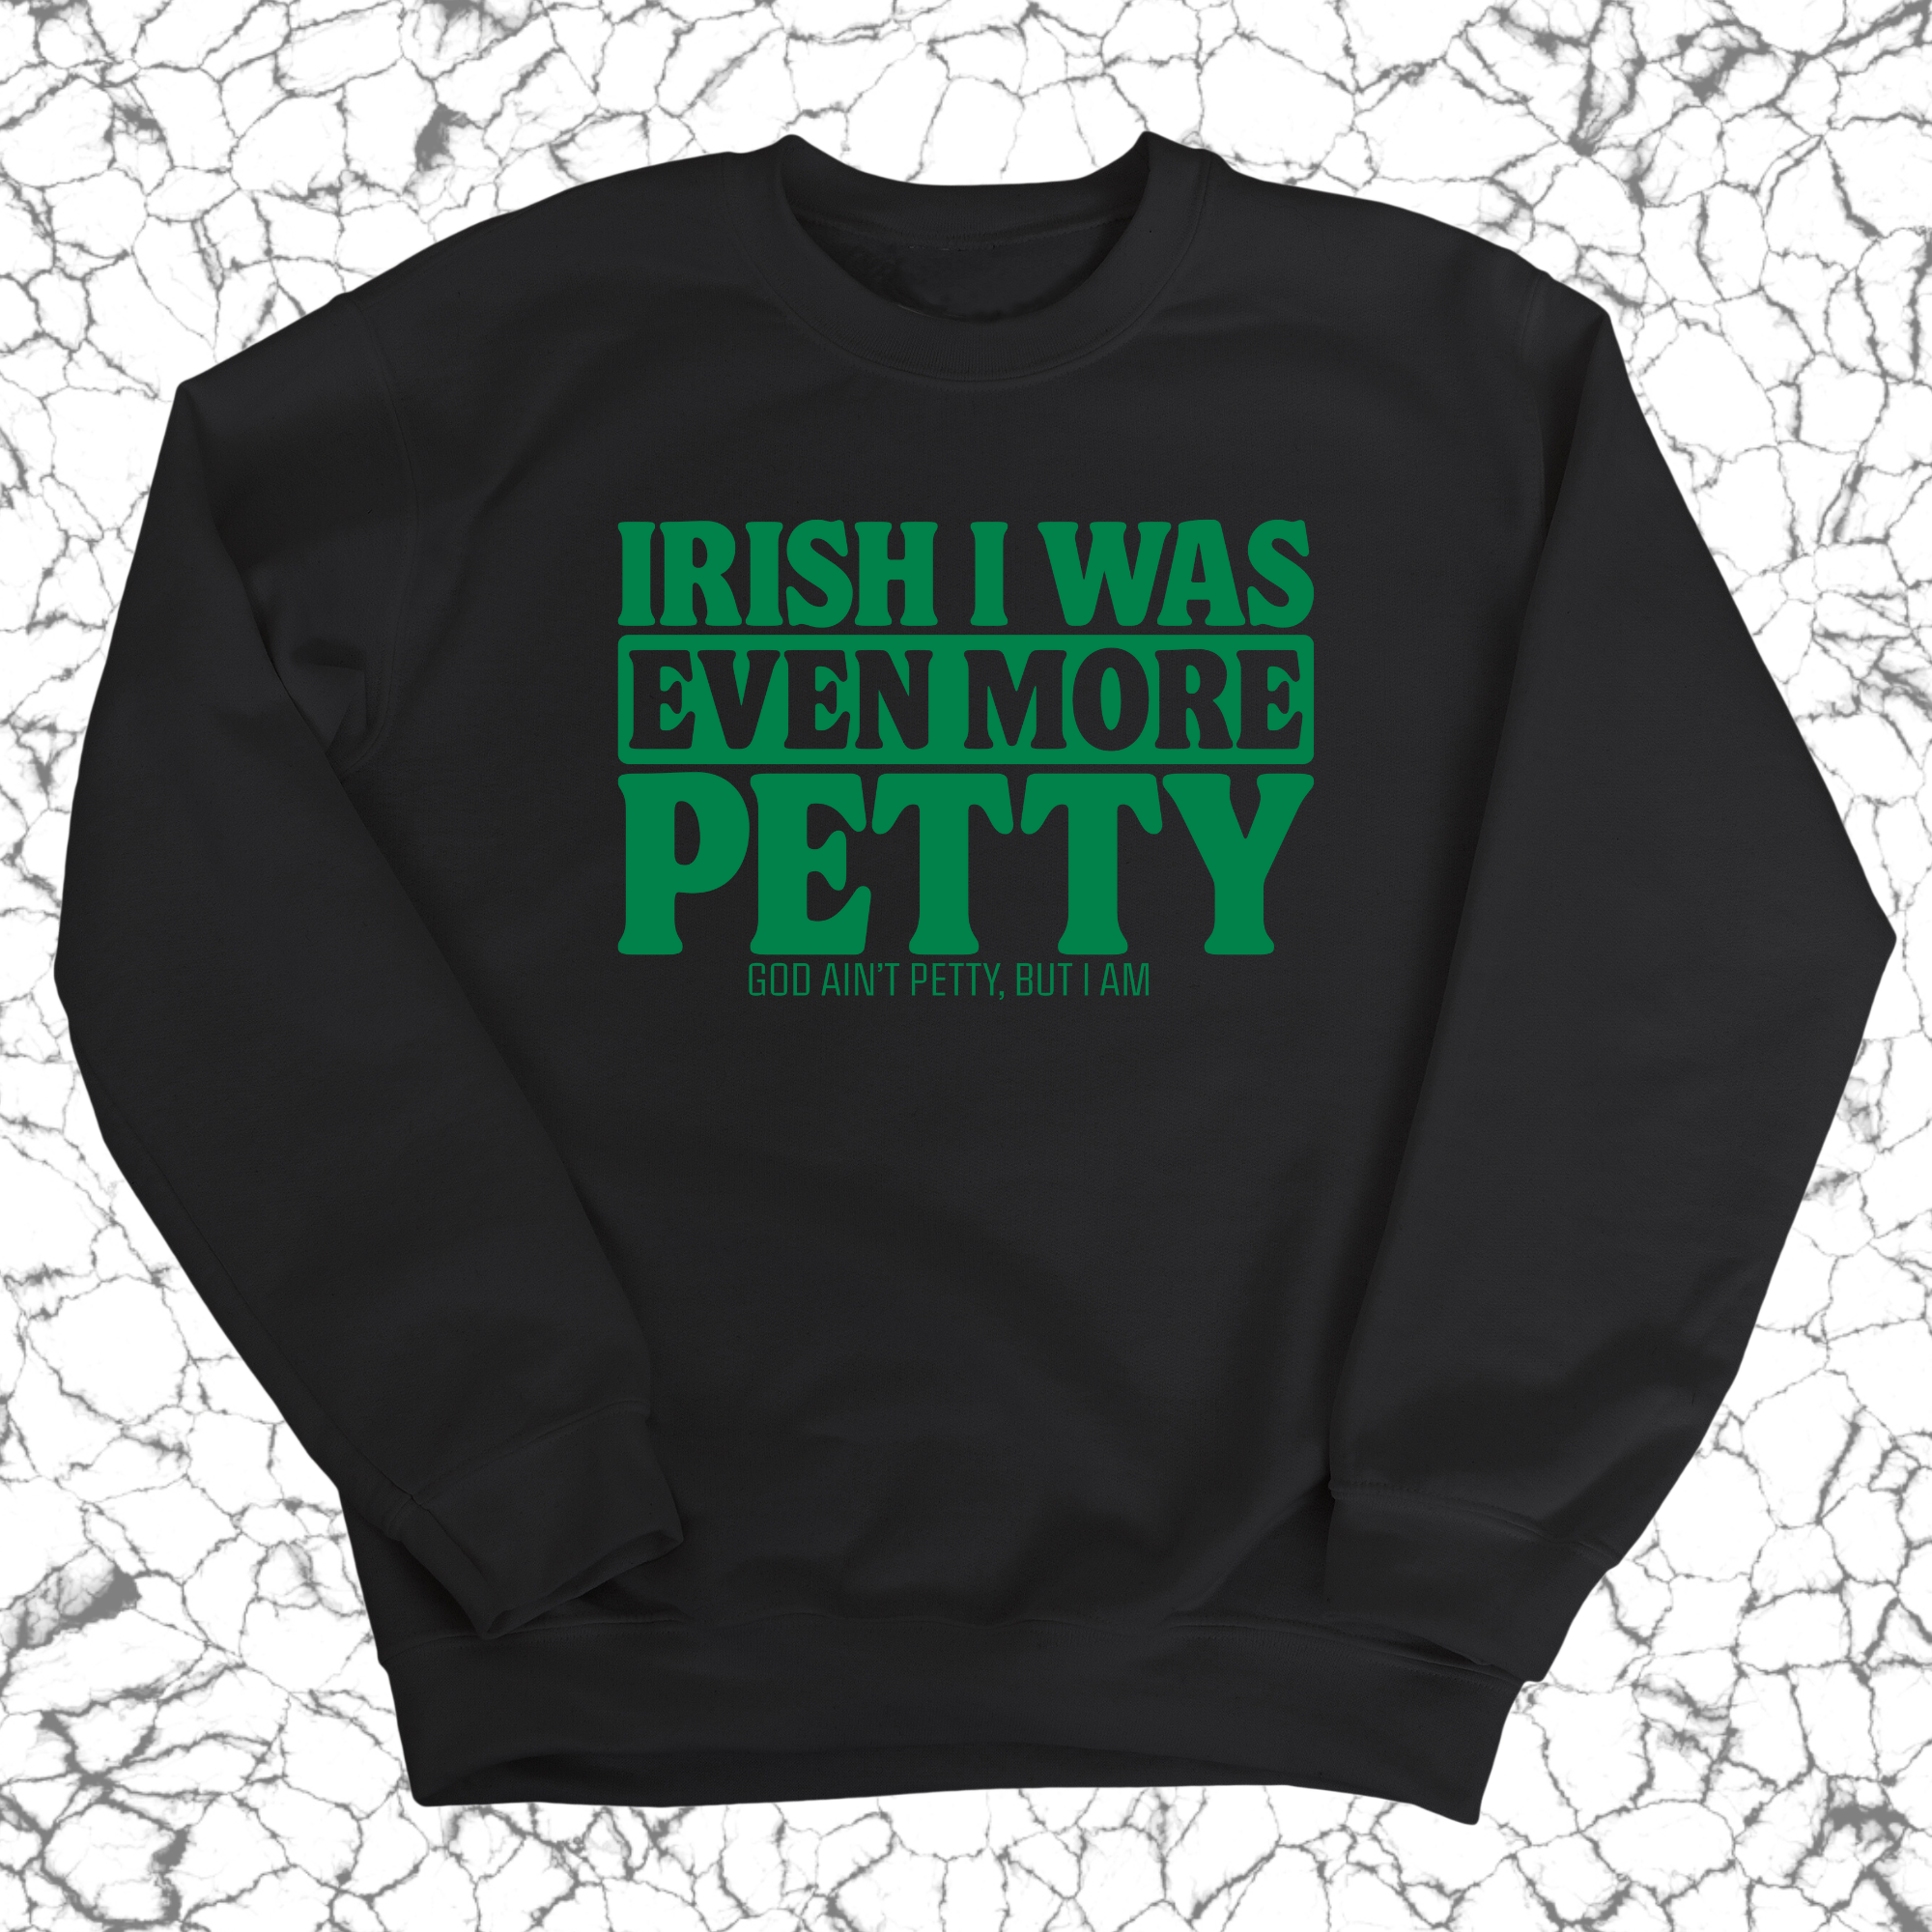 Irish I was even more petty Unisex Sweatshirt (Black/Green)-Sweatshirt-The Original God Ain't Petty But I Am